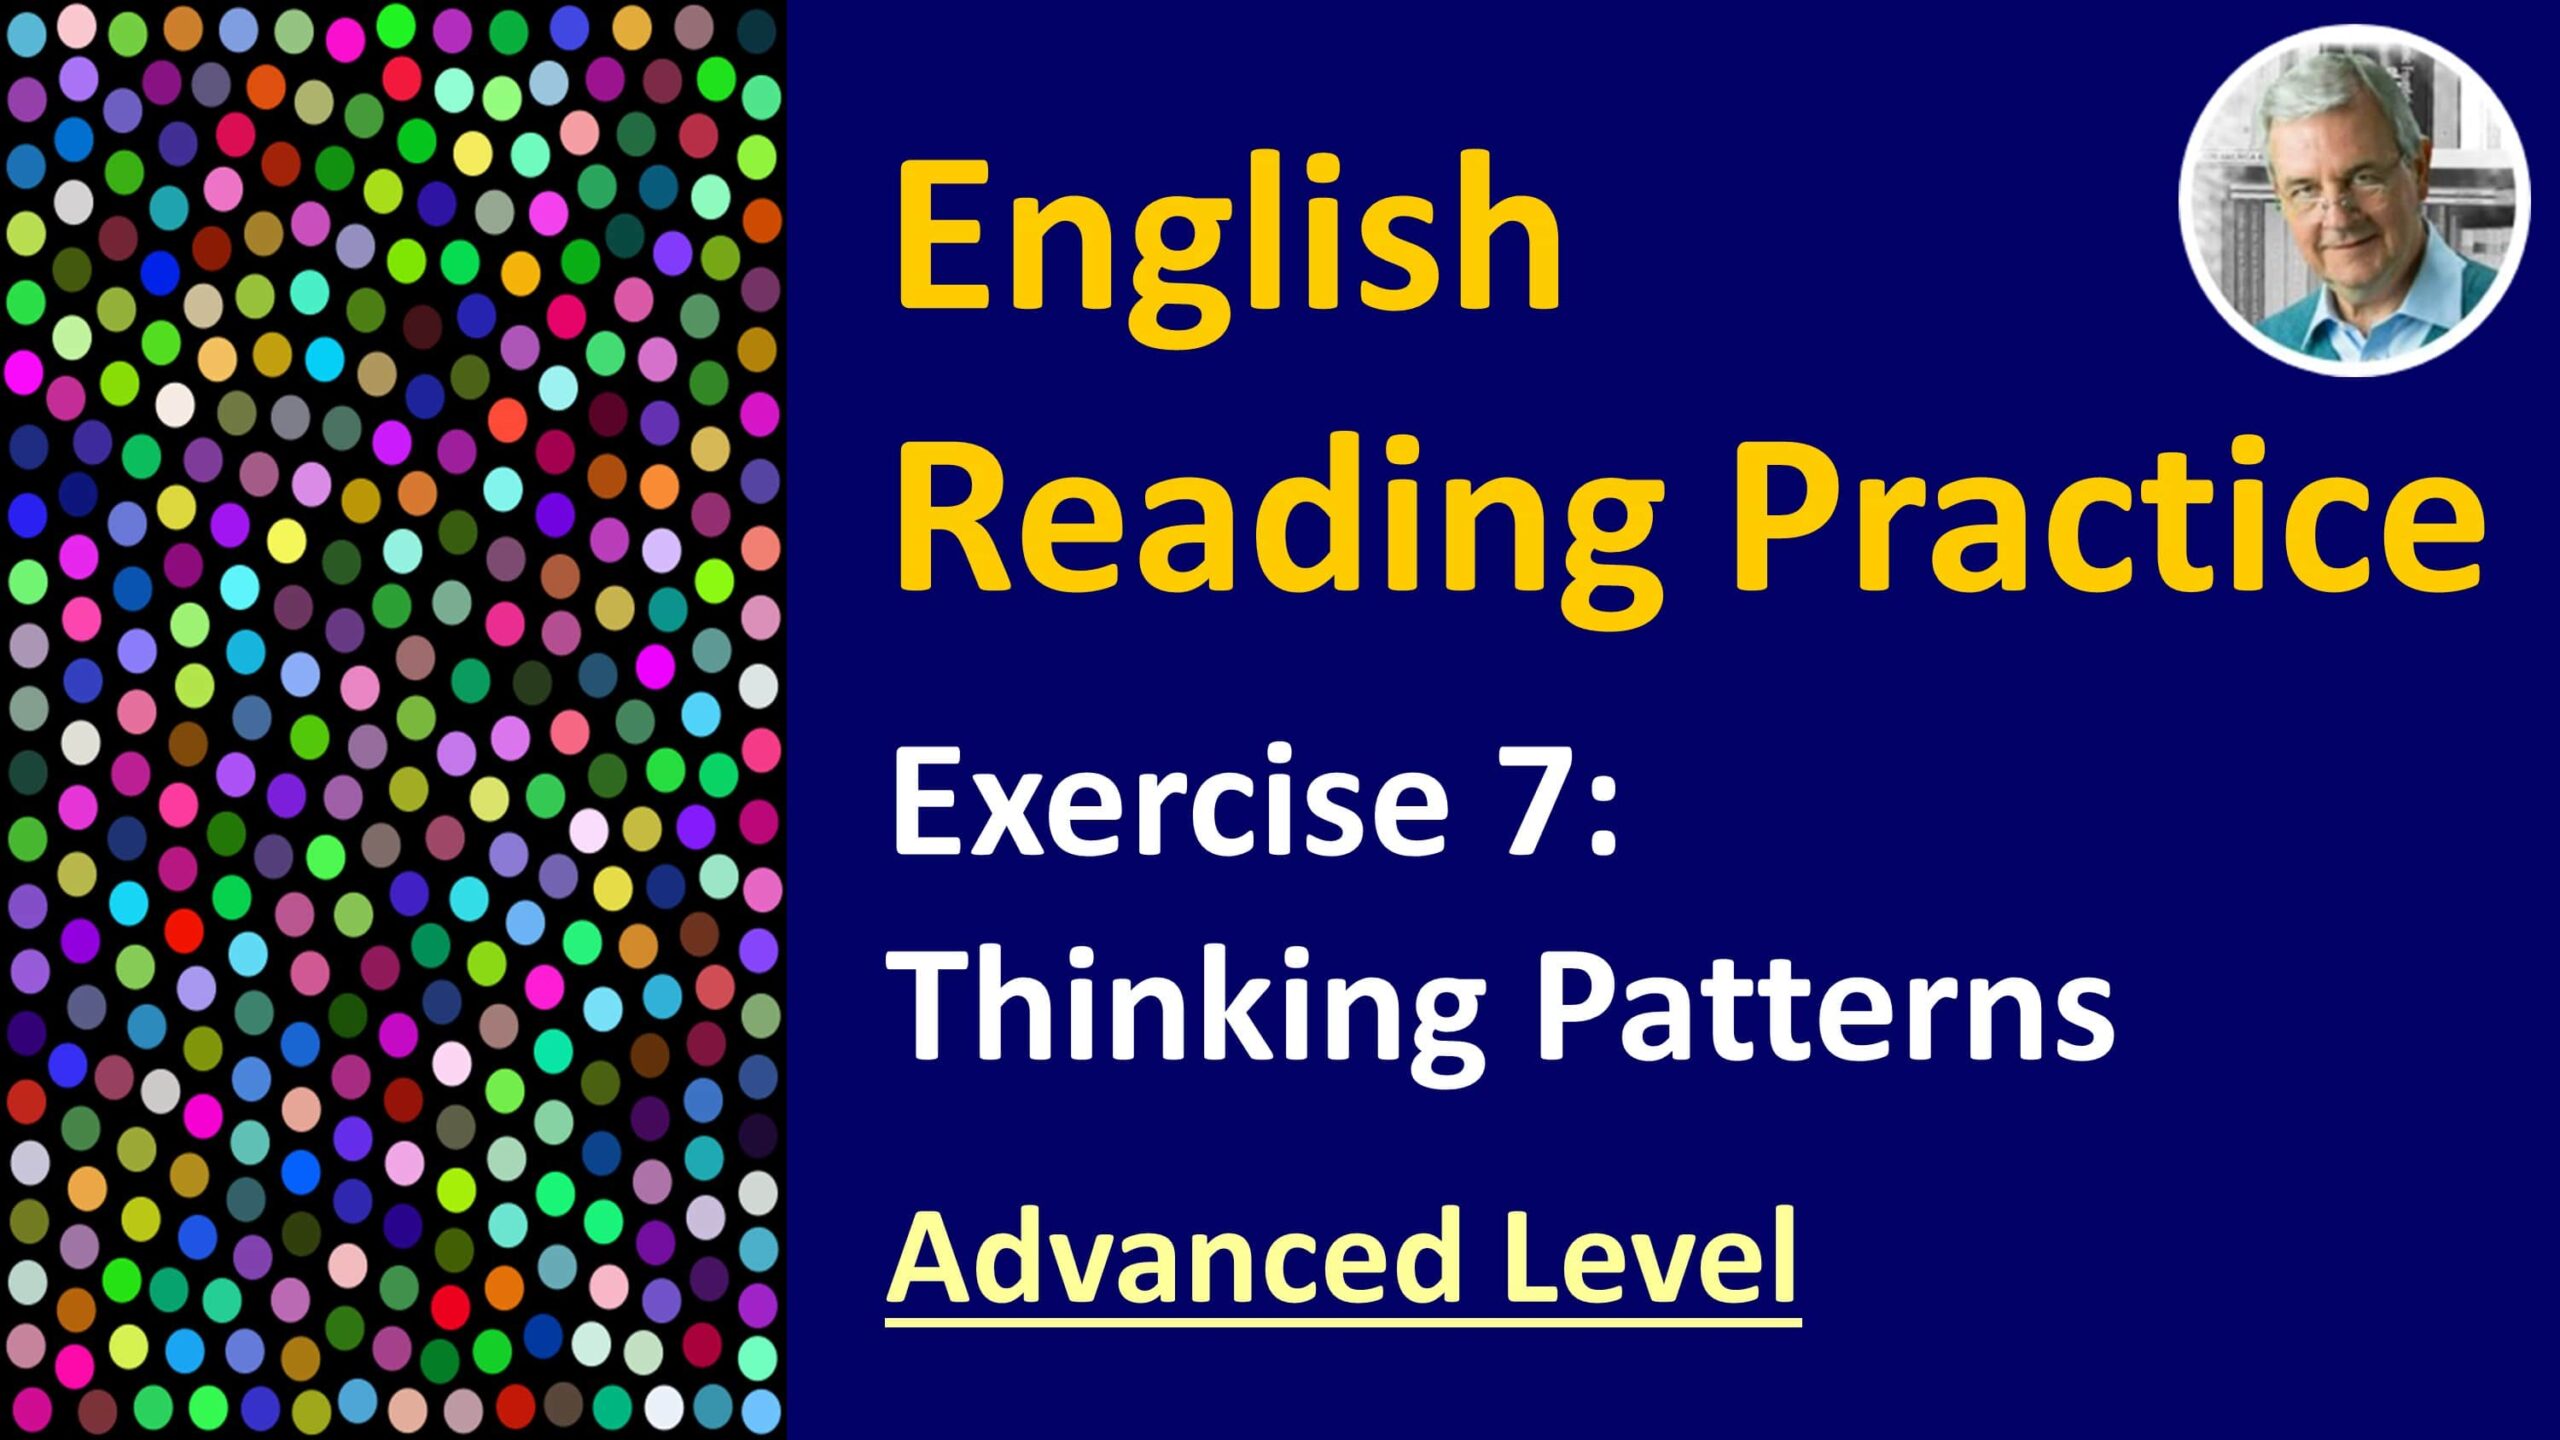 english reading exercise - 7A thinking patterns